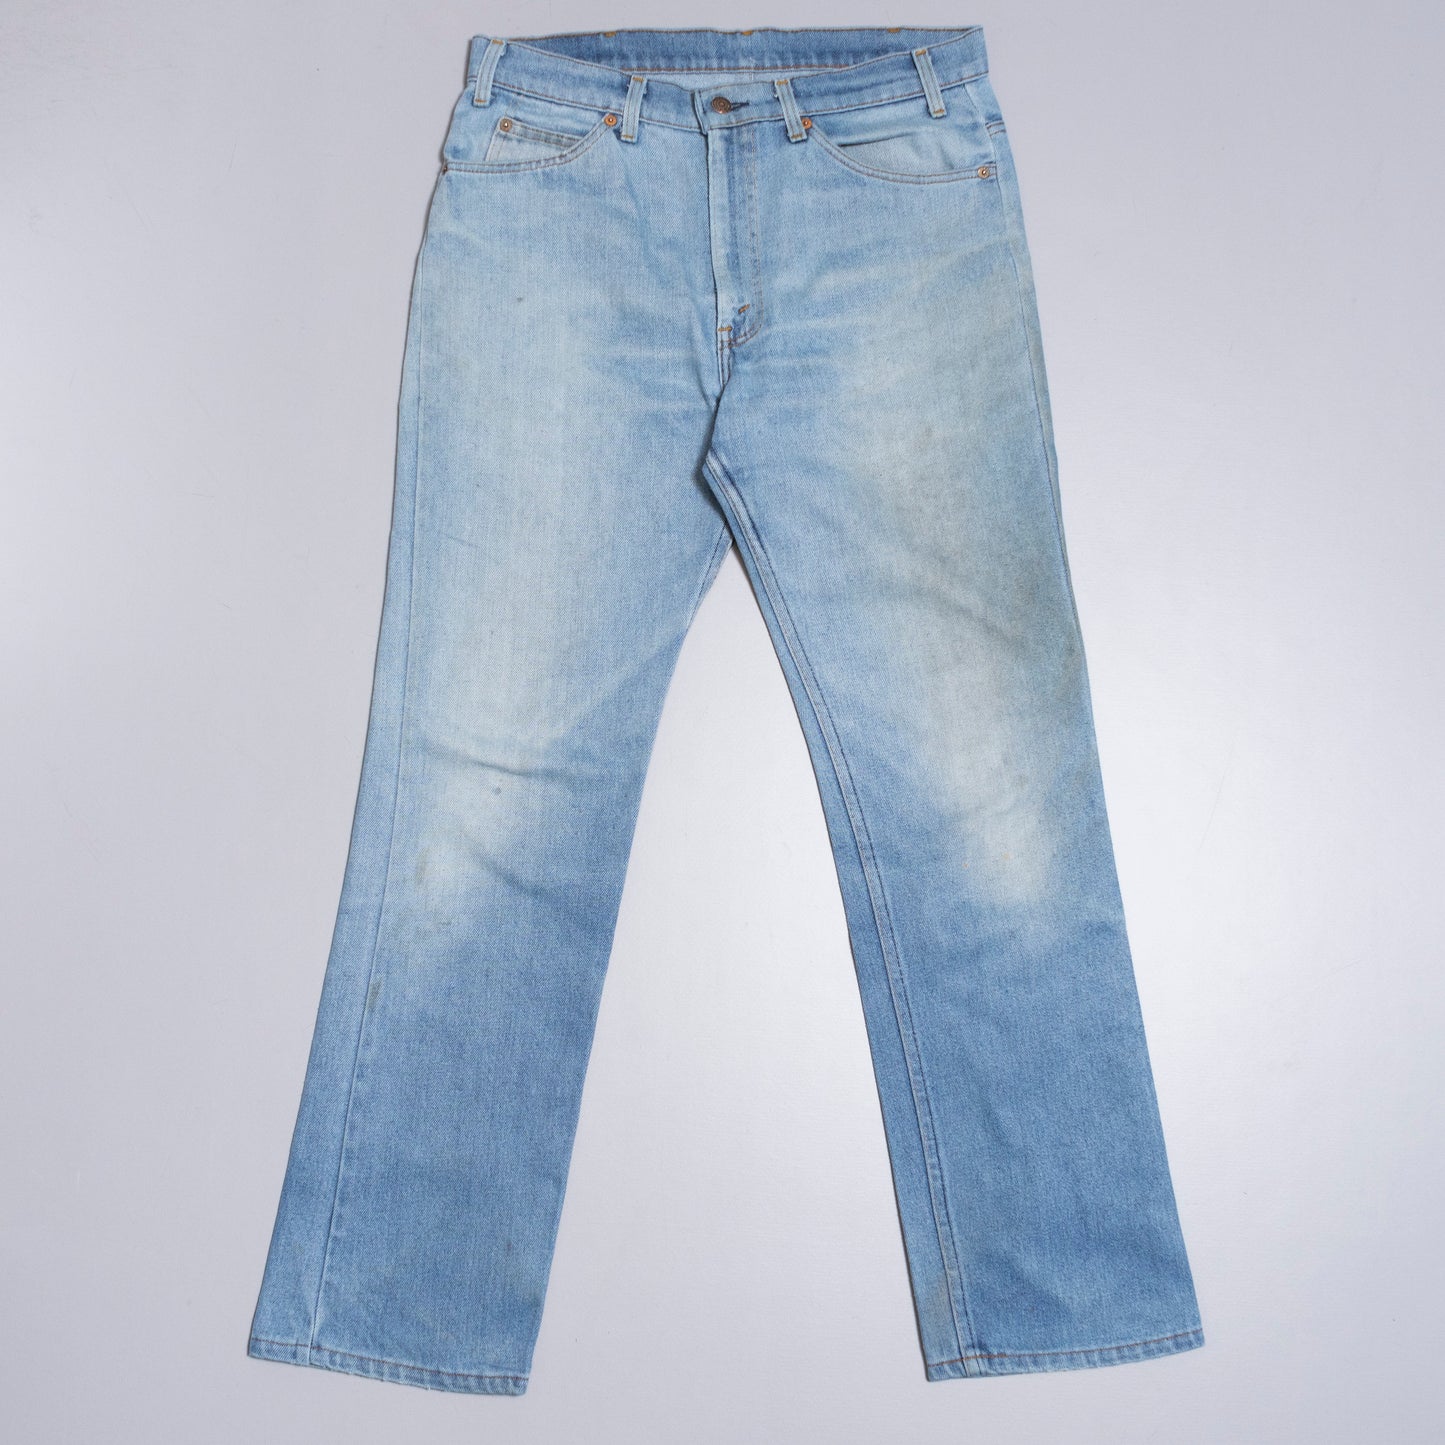 Levis Orange Tab Jeans, 32/32